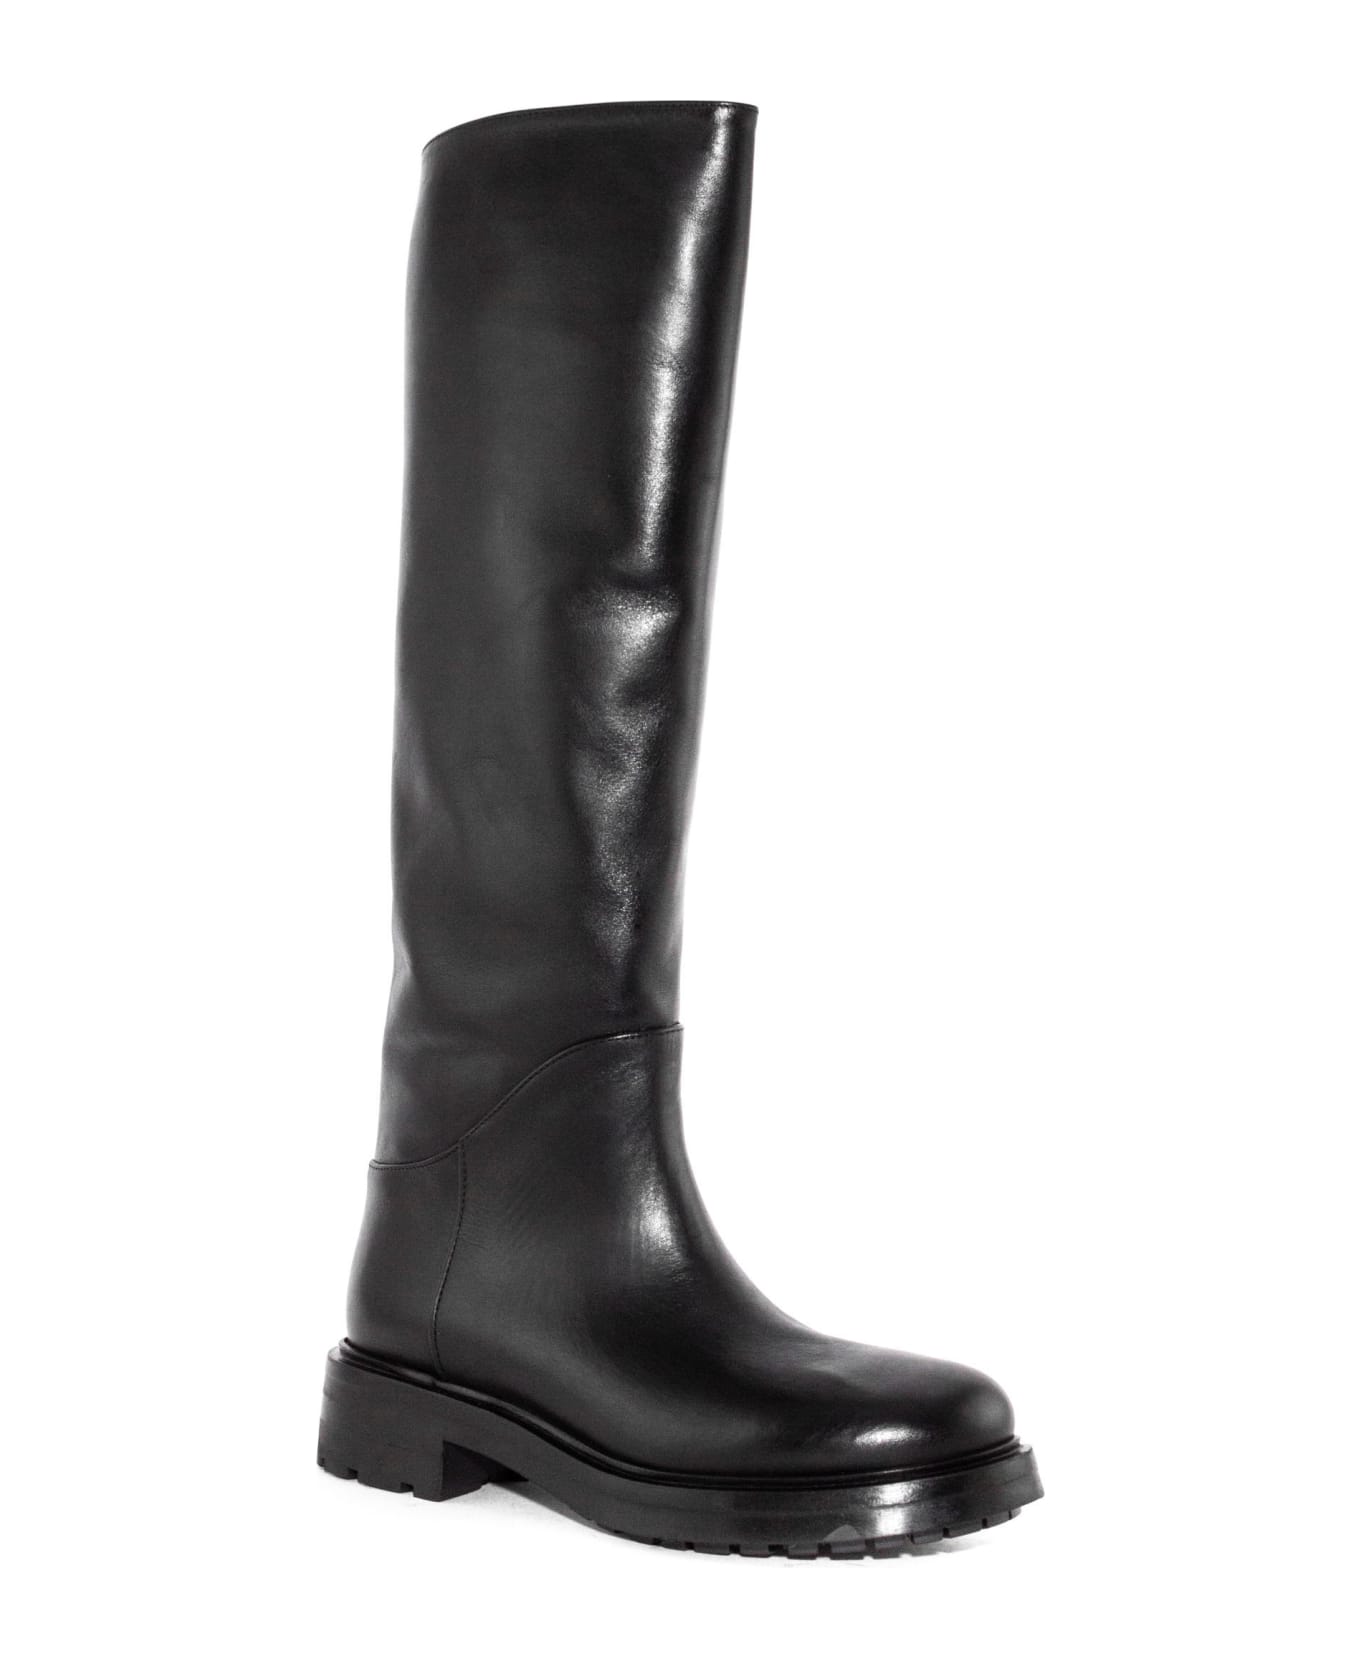 Elena Iachi Black Leather High Boots - Nero